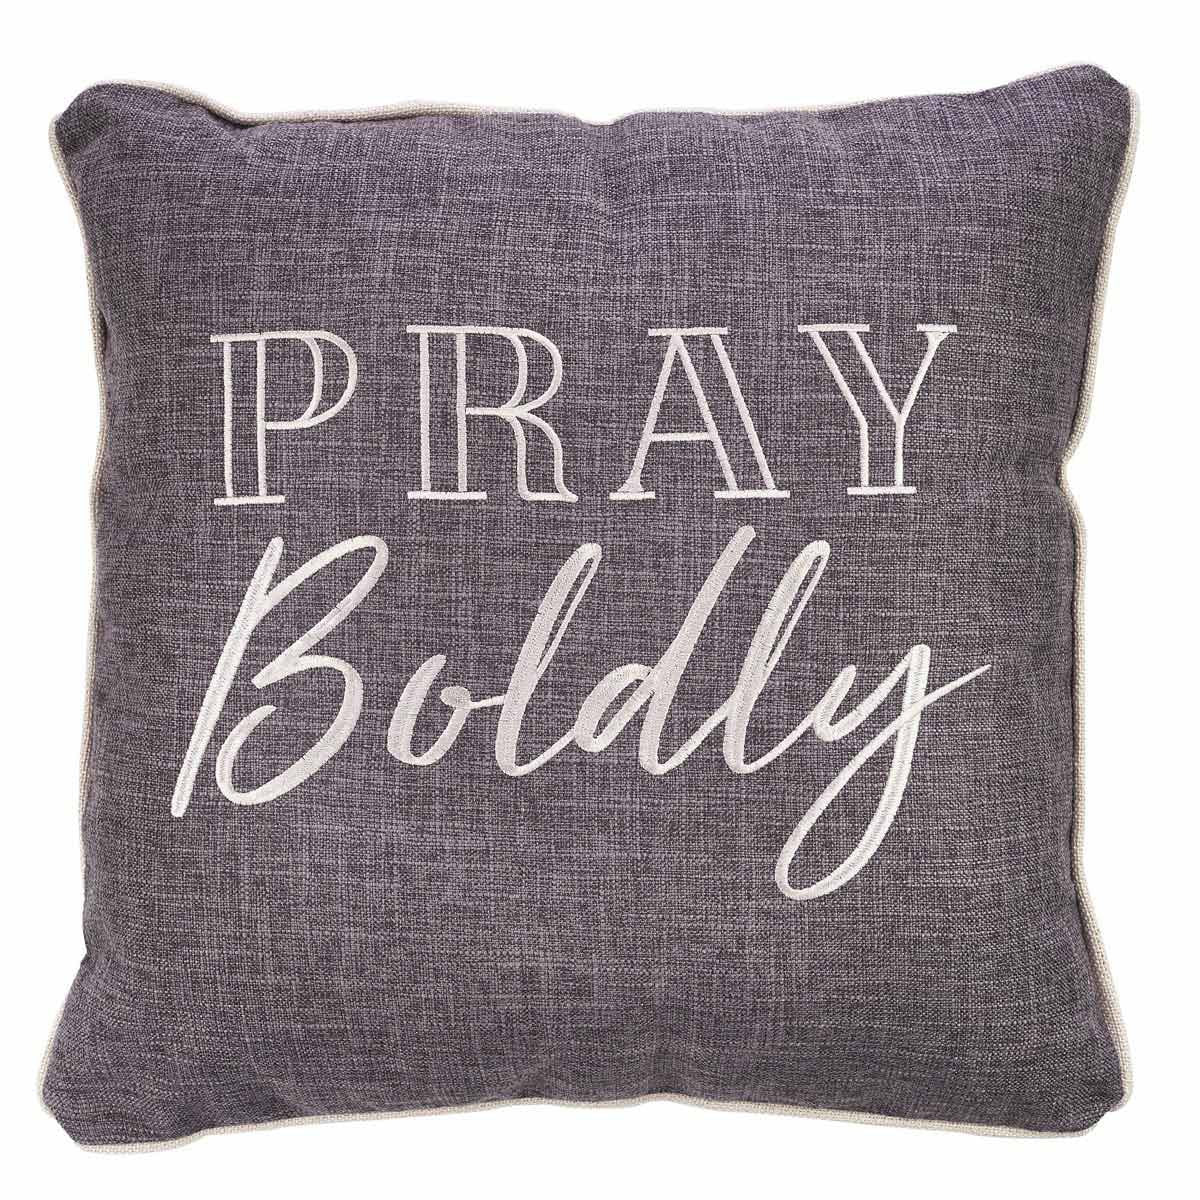 Pray Boldly Square Pillow